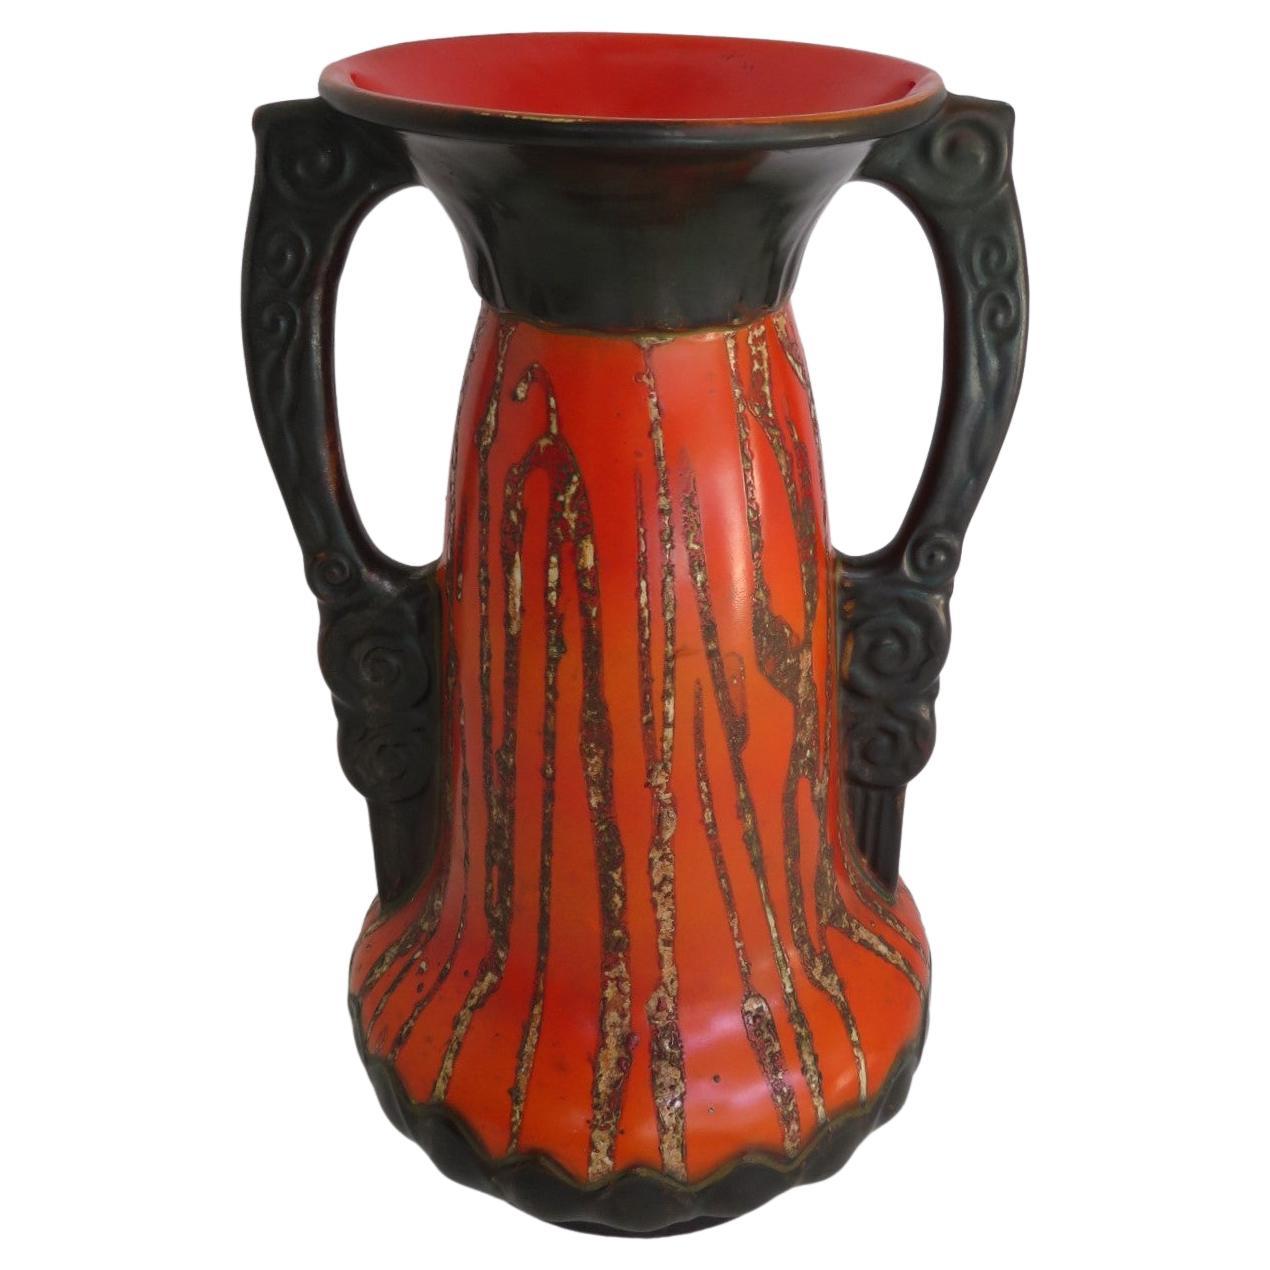 Art Nouveau Modern Czechoslovakian Red & Black Ceramic Vase with Handles, 1930s For Sale